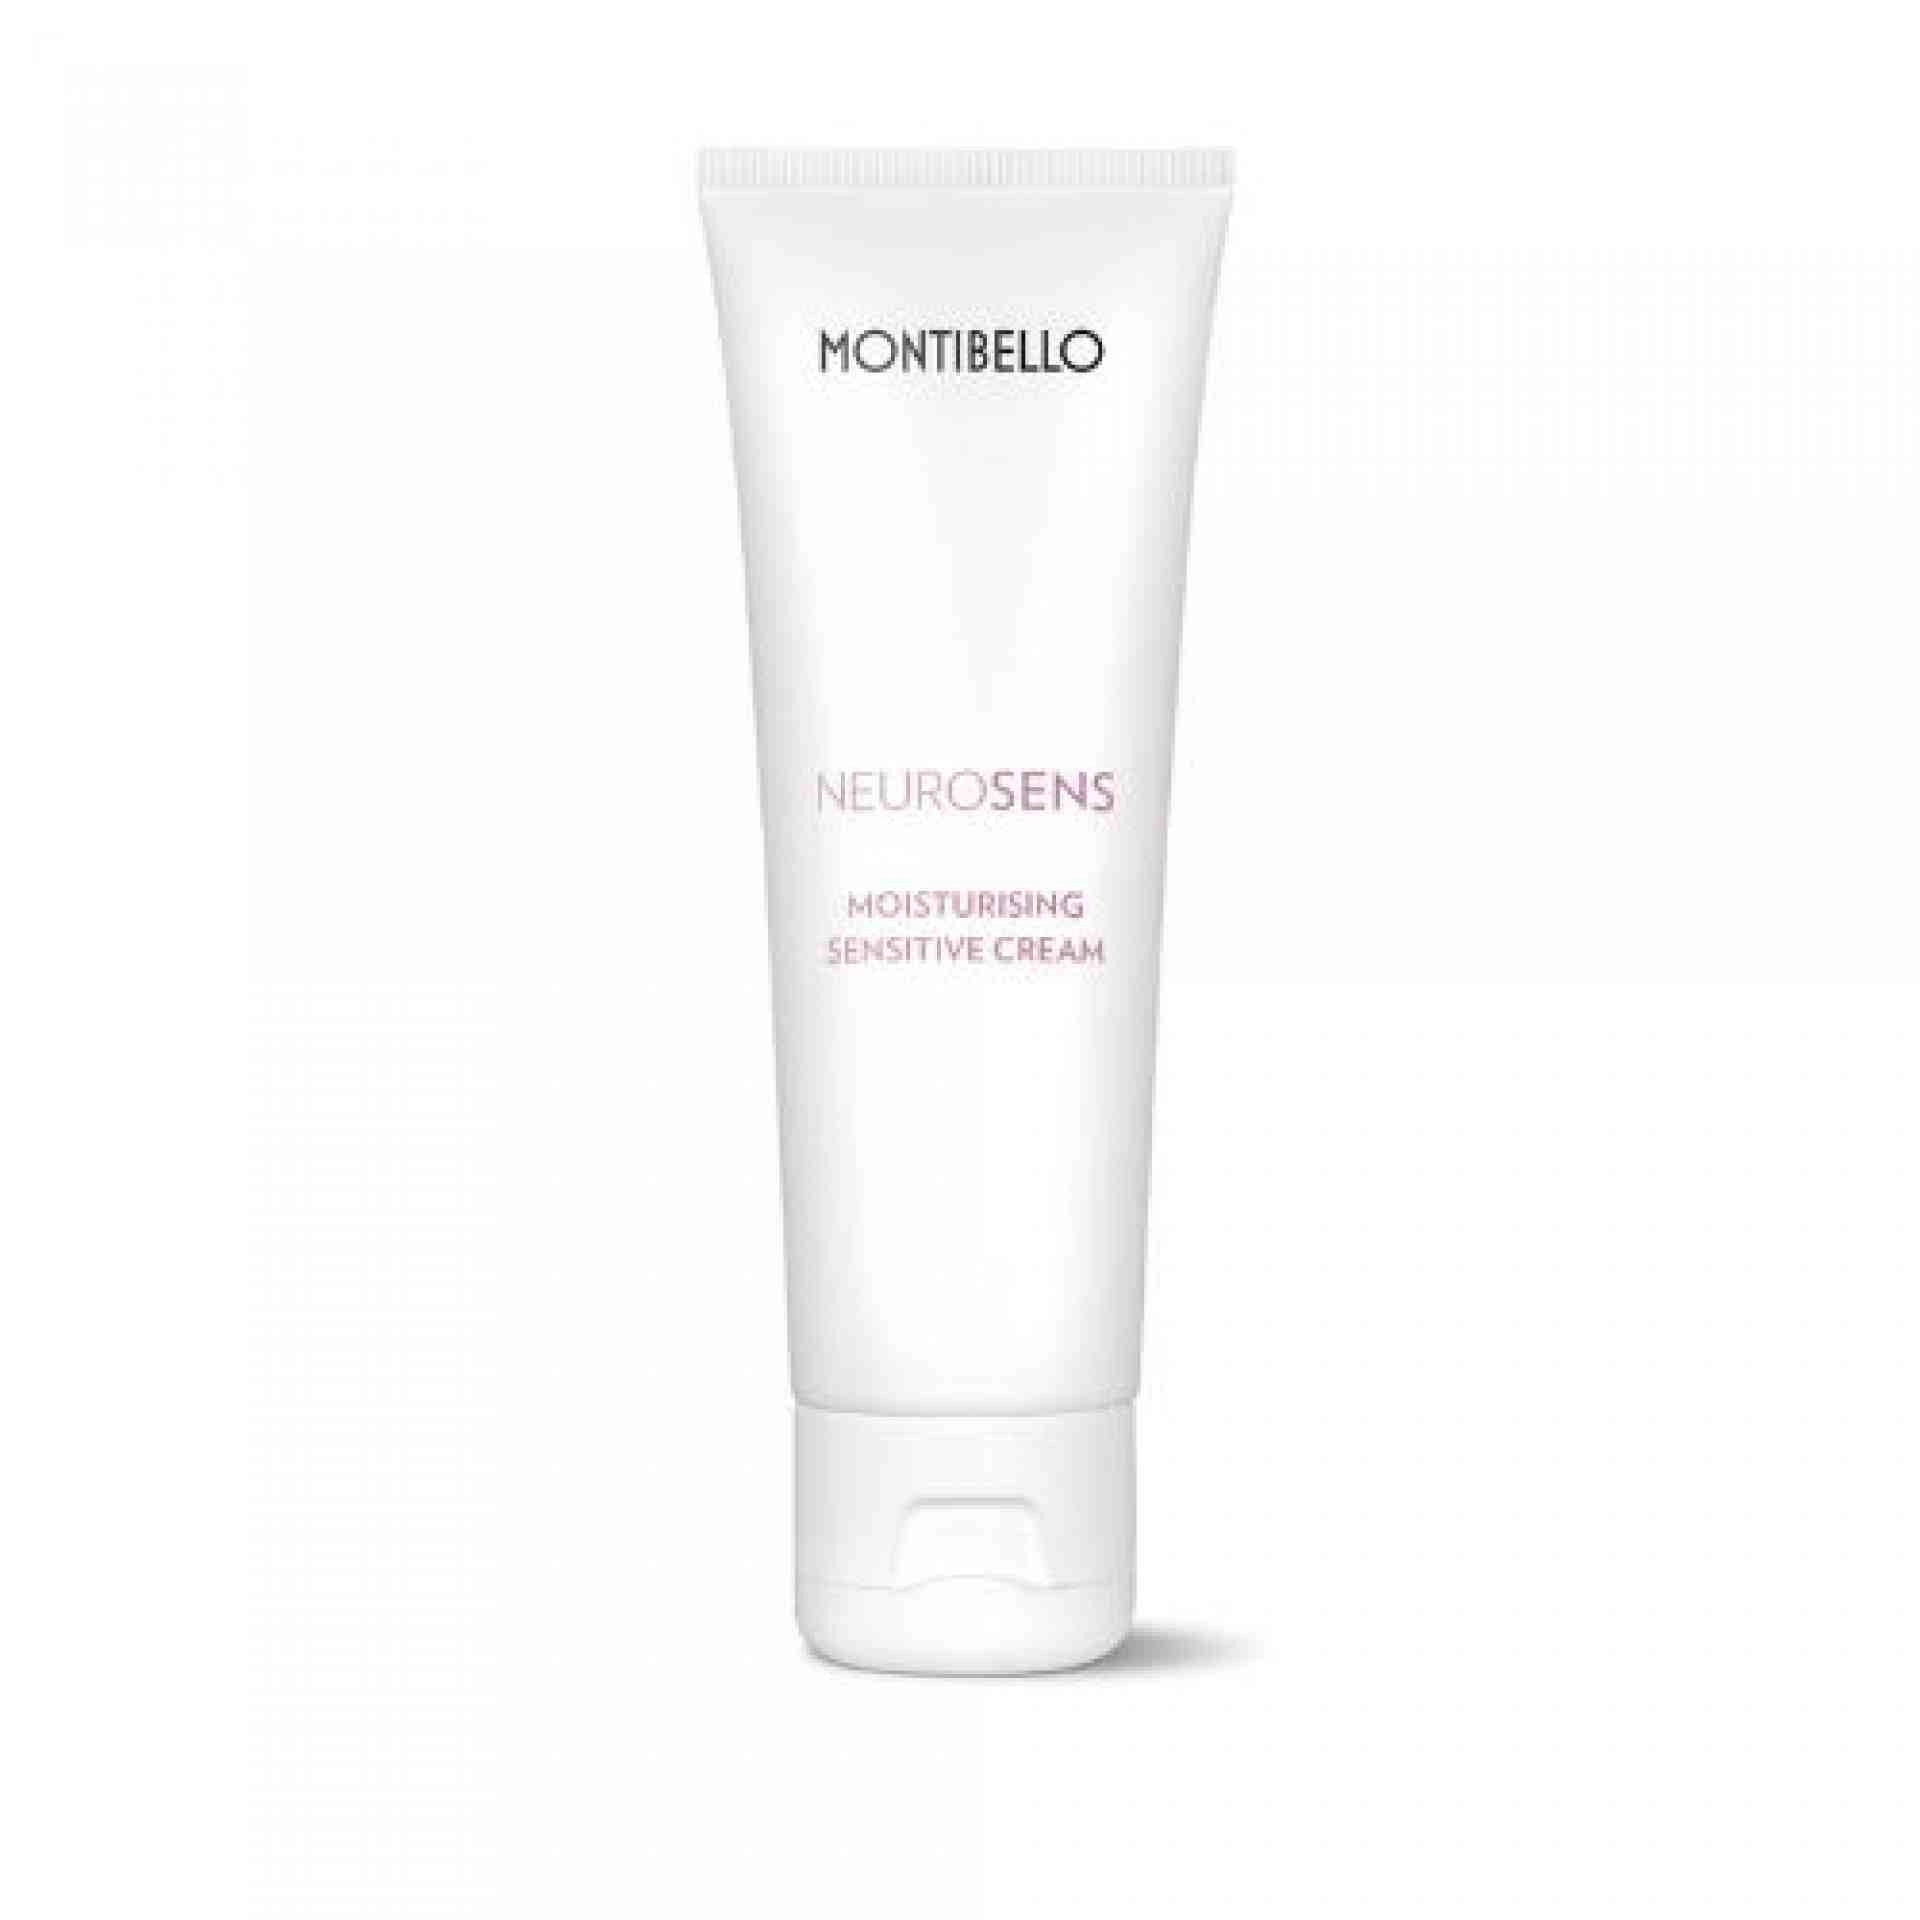 Moisturising Sensitive Cream | Crema Piel sensible, mixta o grasa 50ml - Neurosens - Montibello ®